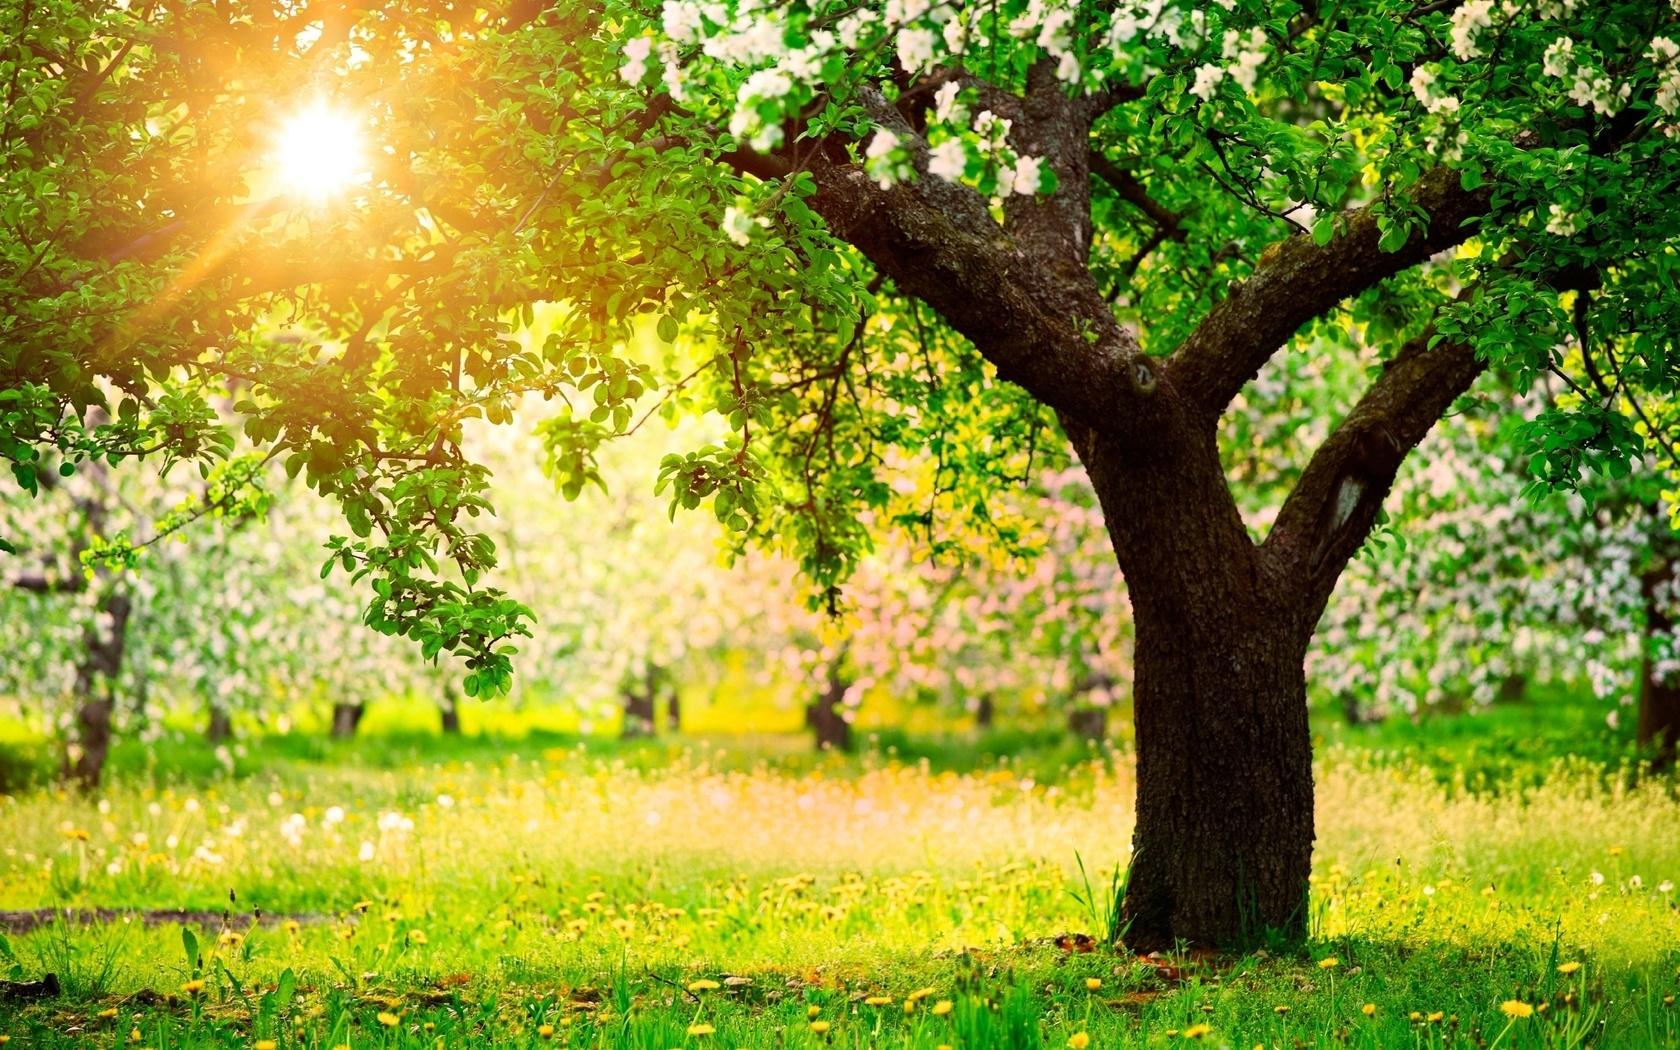 Картинки весна, природа, яблочный сад, красиво, лучи солнца, фото позитив,  цветение, цветы, одуванчики, дерево, груша - обои 1680x1050, картинка  №131380